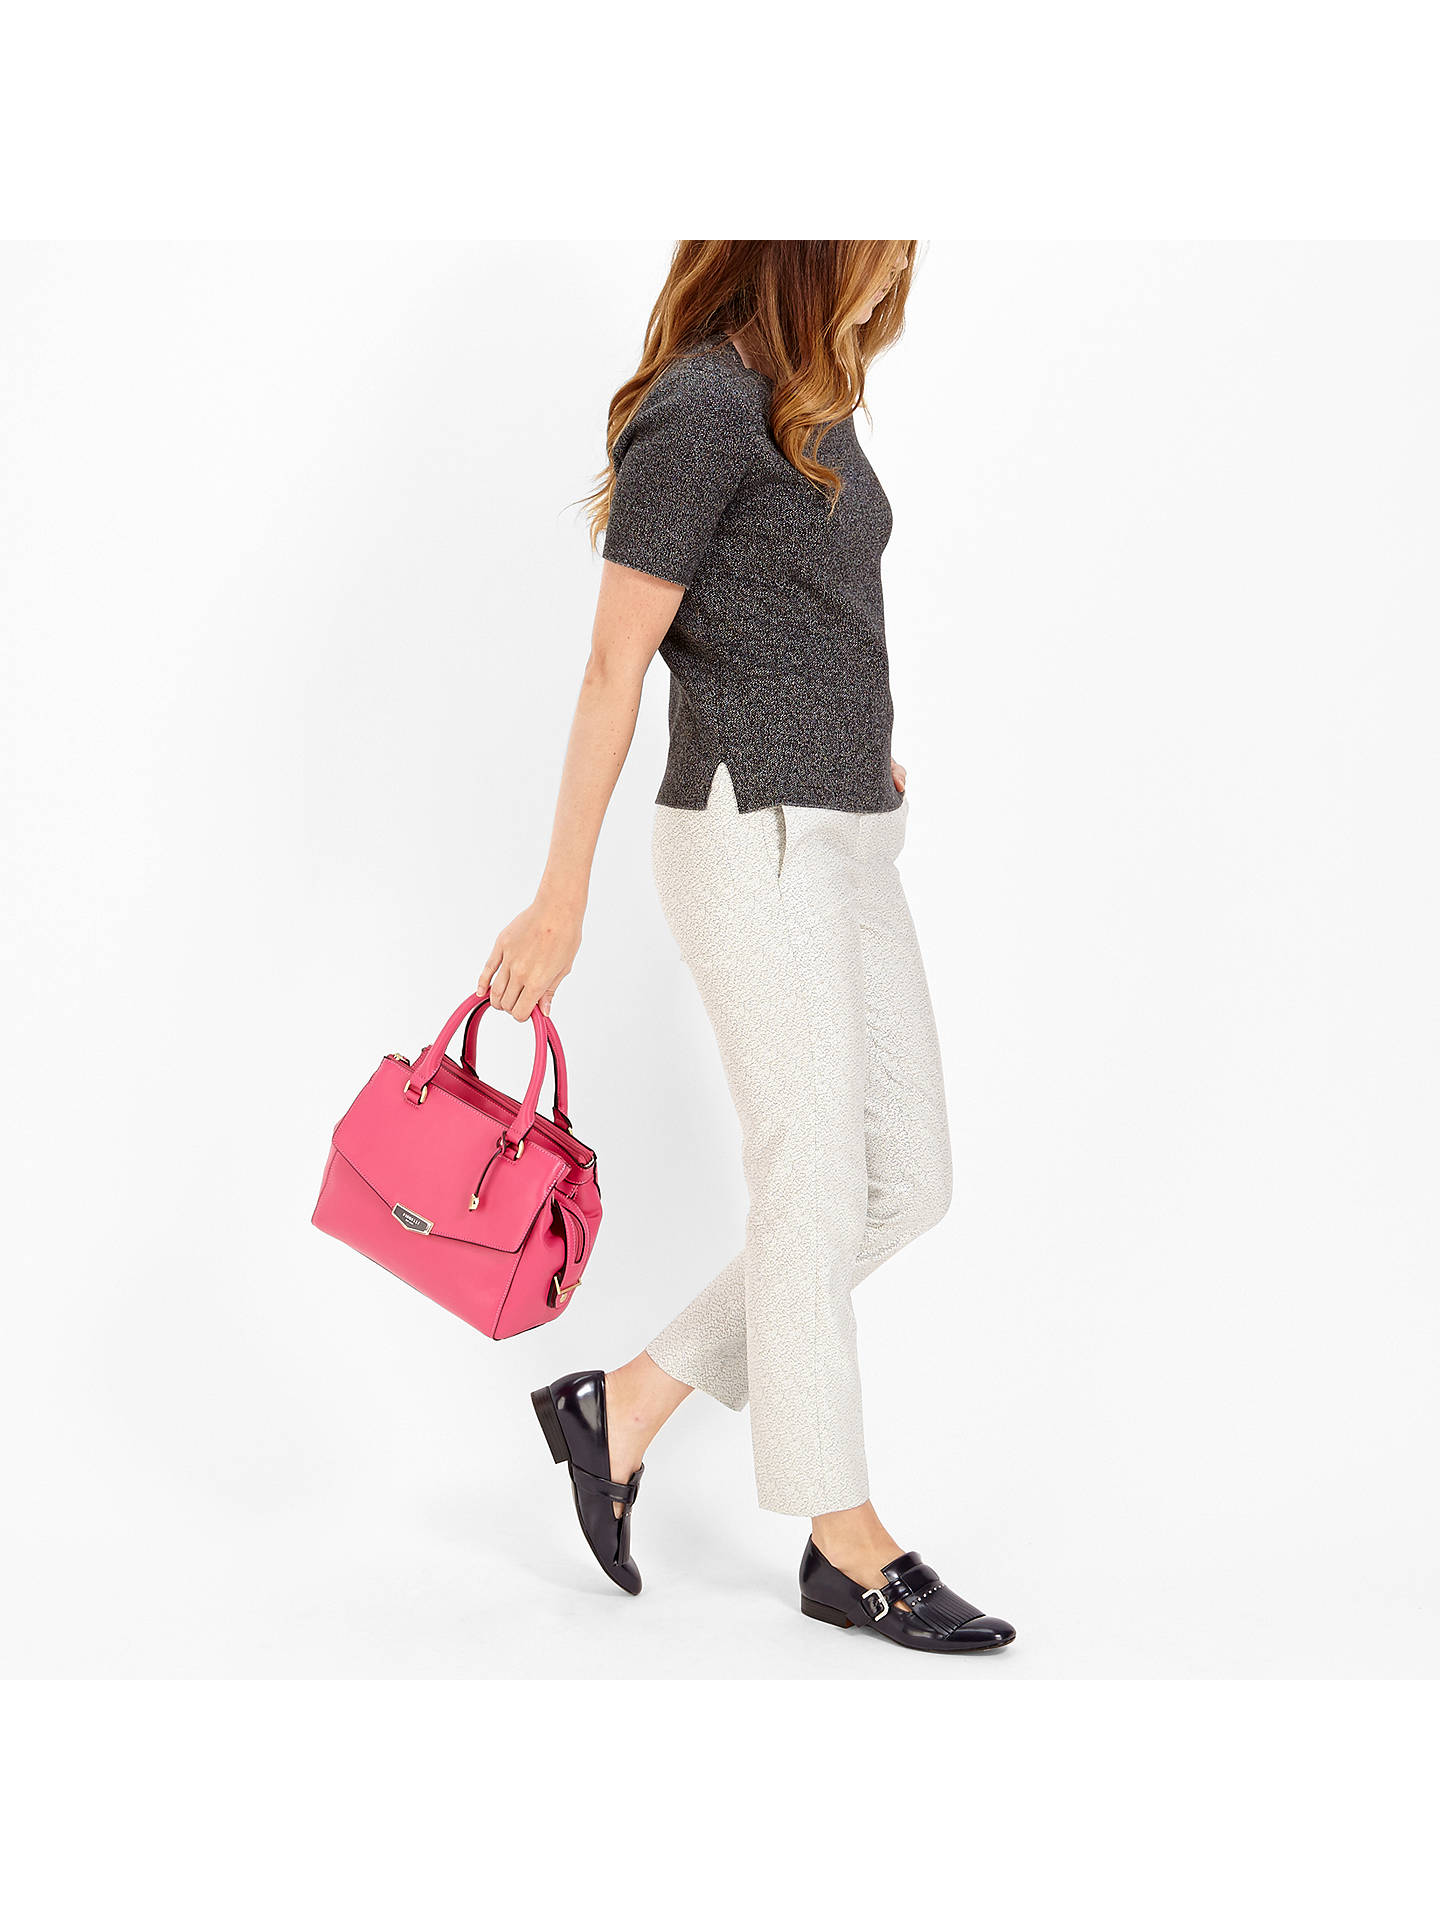 Fiorelli Mia Grab Bag, Power Pink at John Lewis & Partners